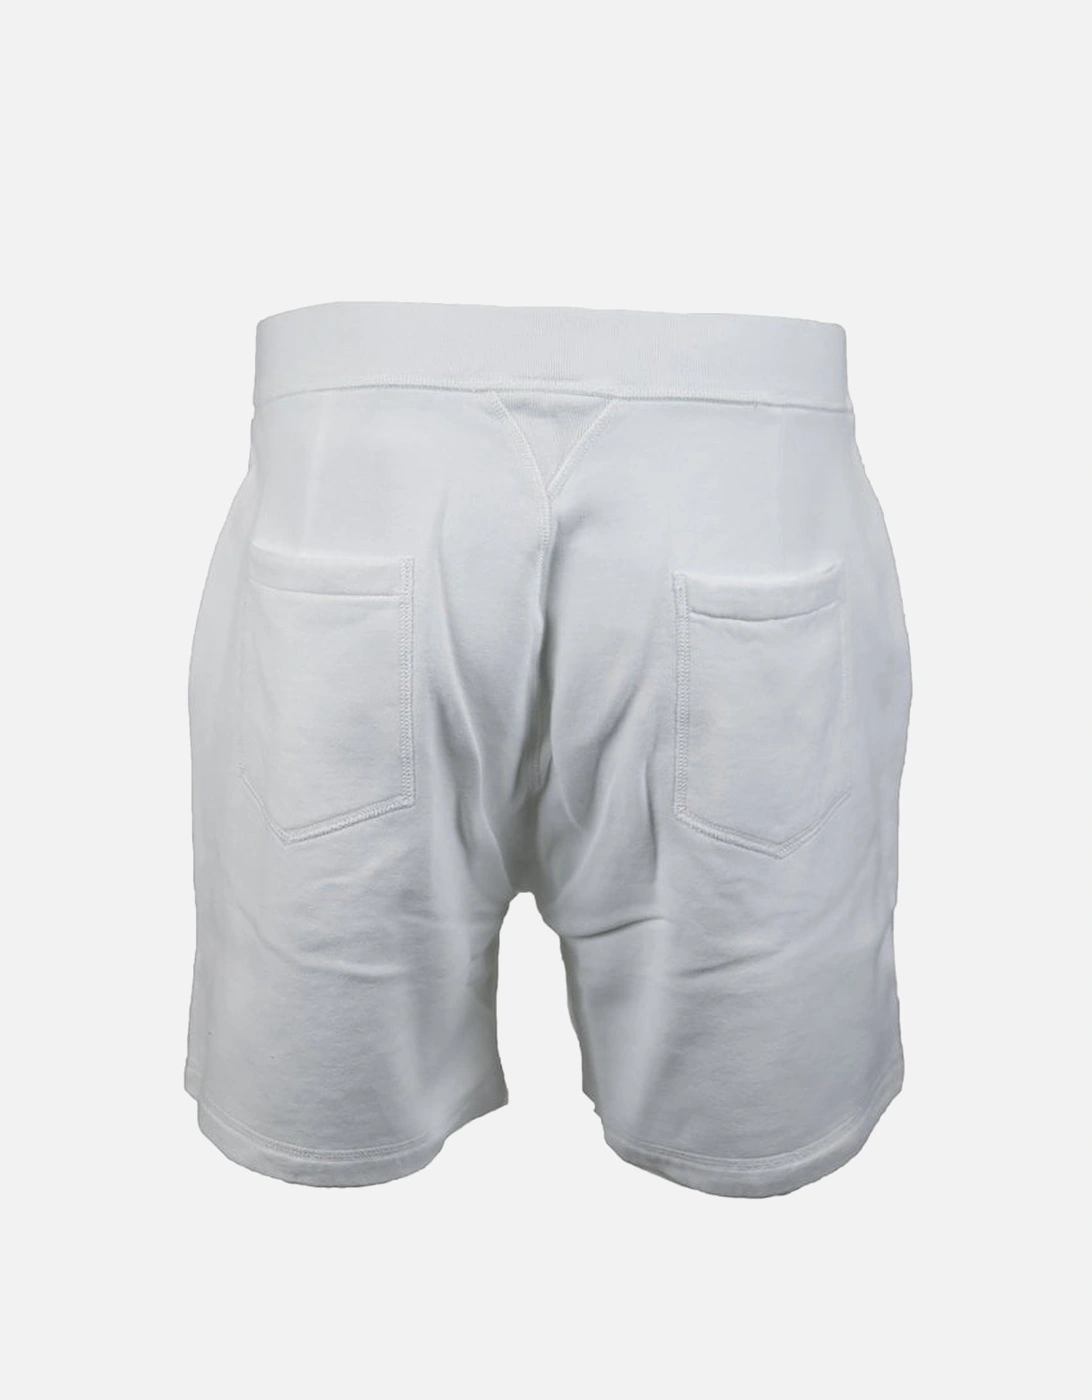 Icon Sweat Shorts